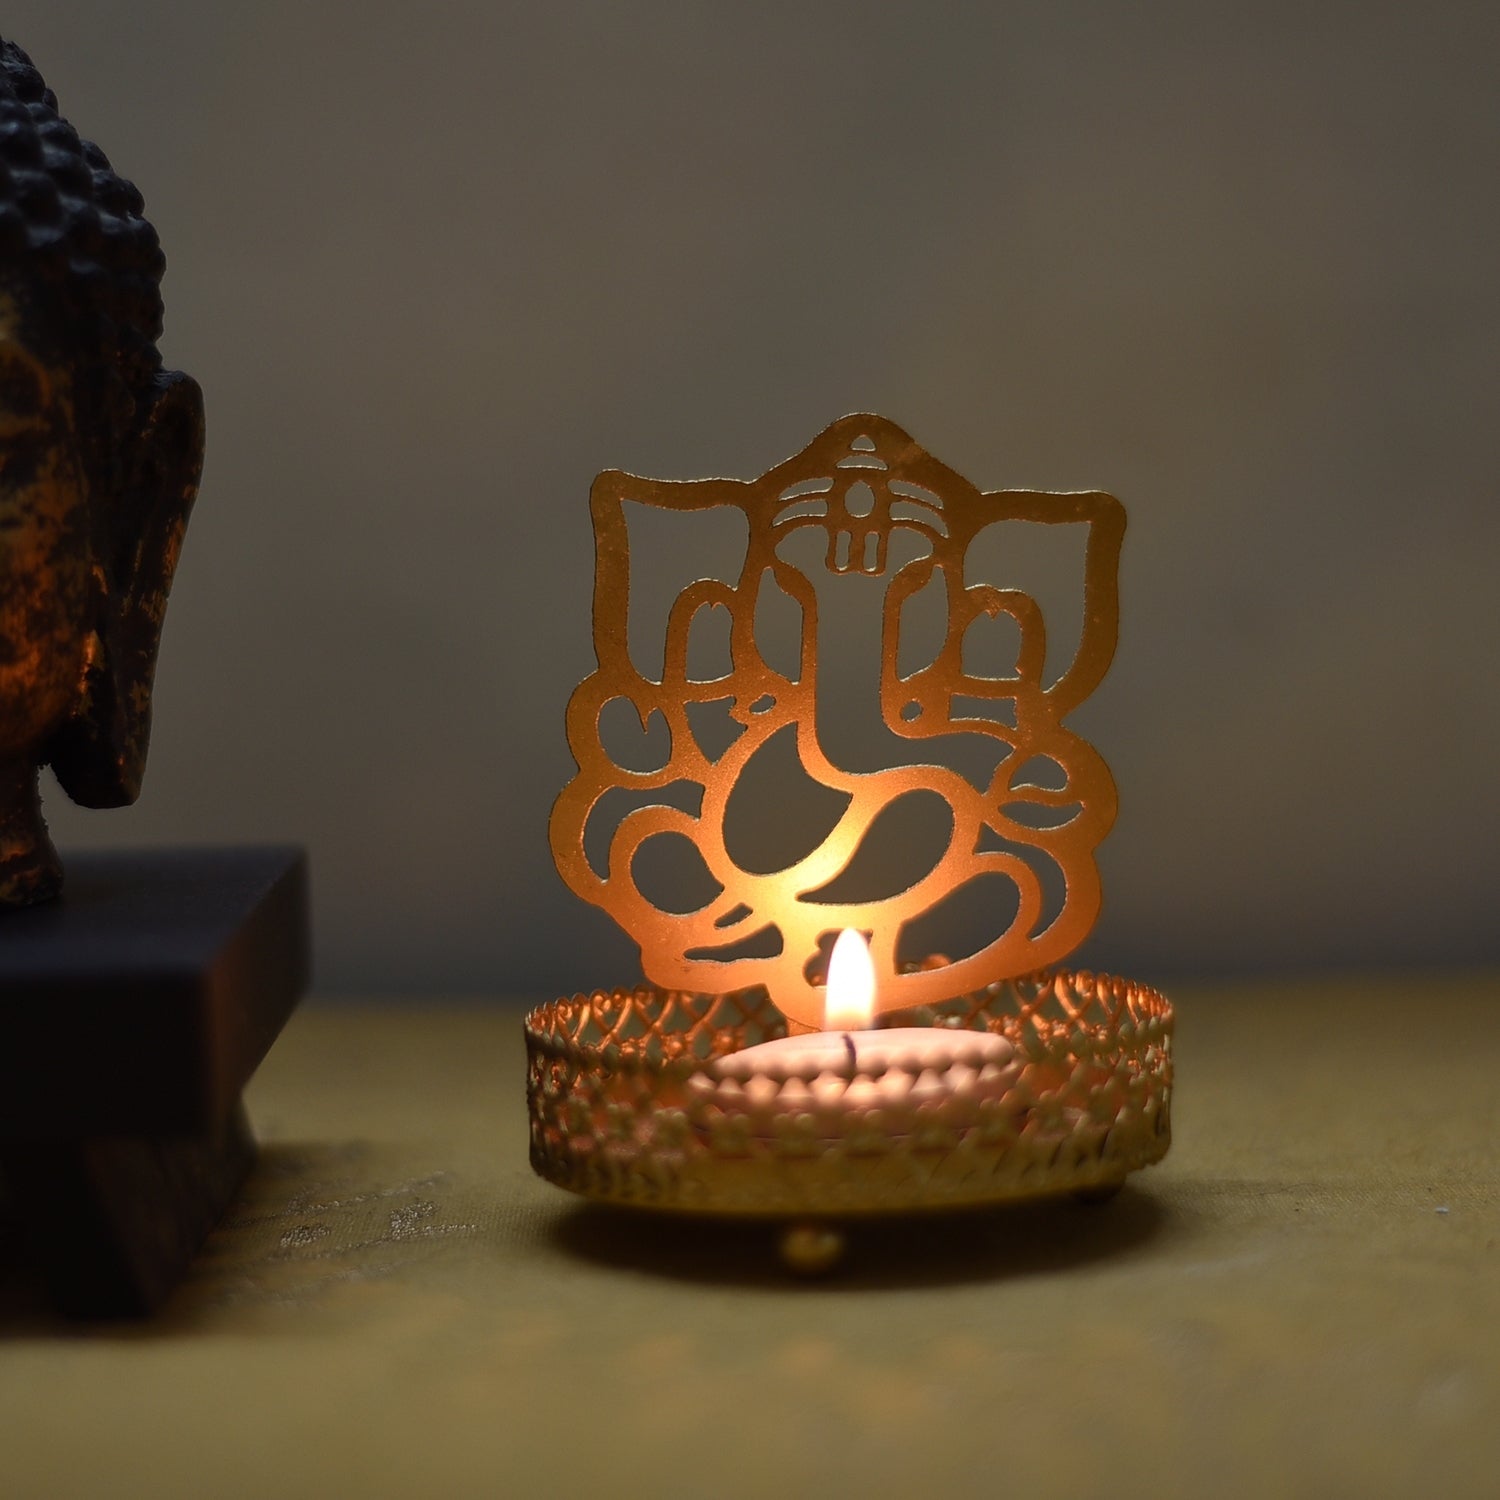 Metal Golden Lord Ganesha tea light candle holder that cast shadows 1